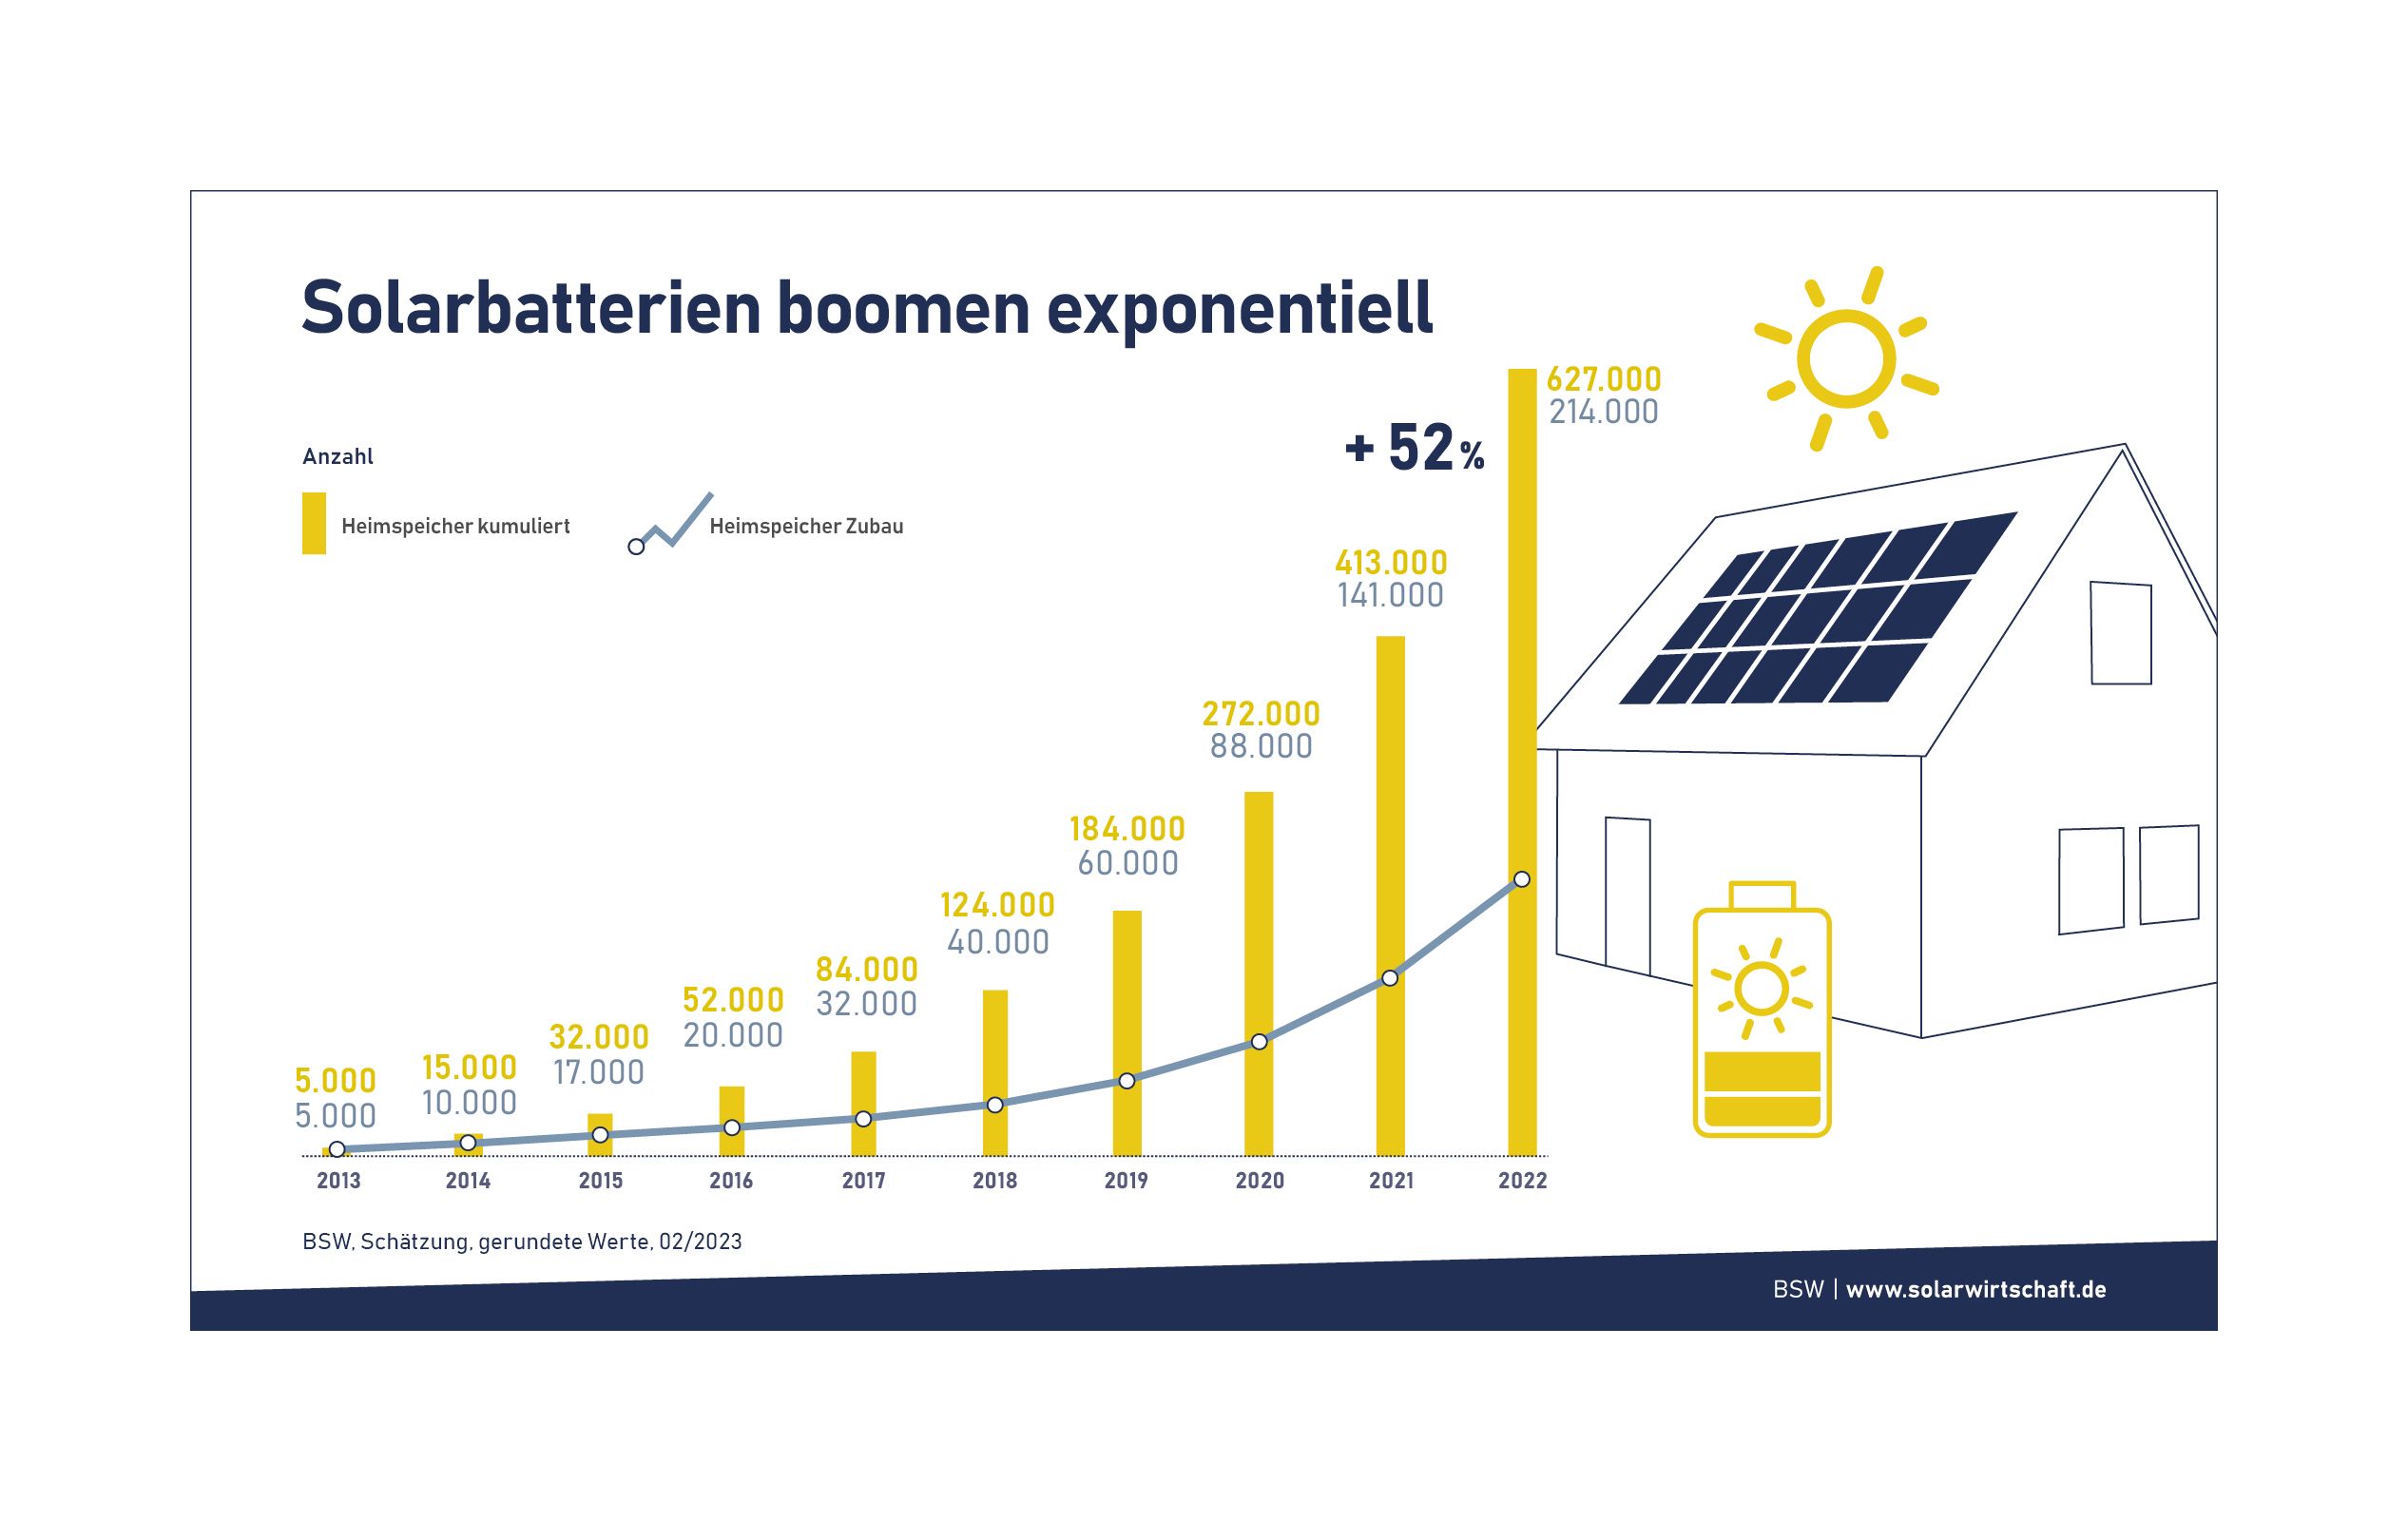 Solarbatterien boomen exponentiell